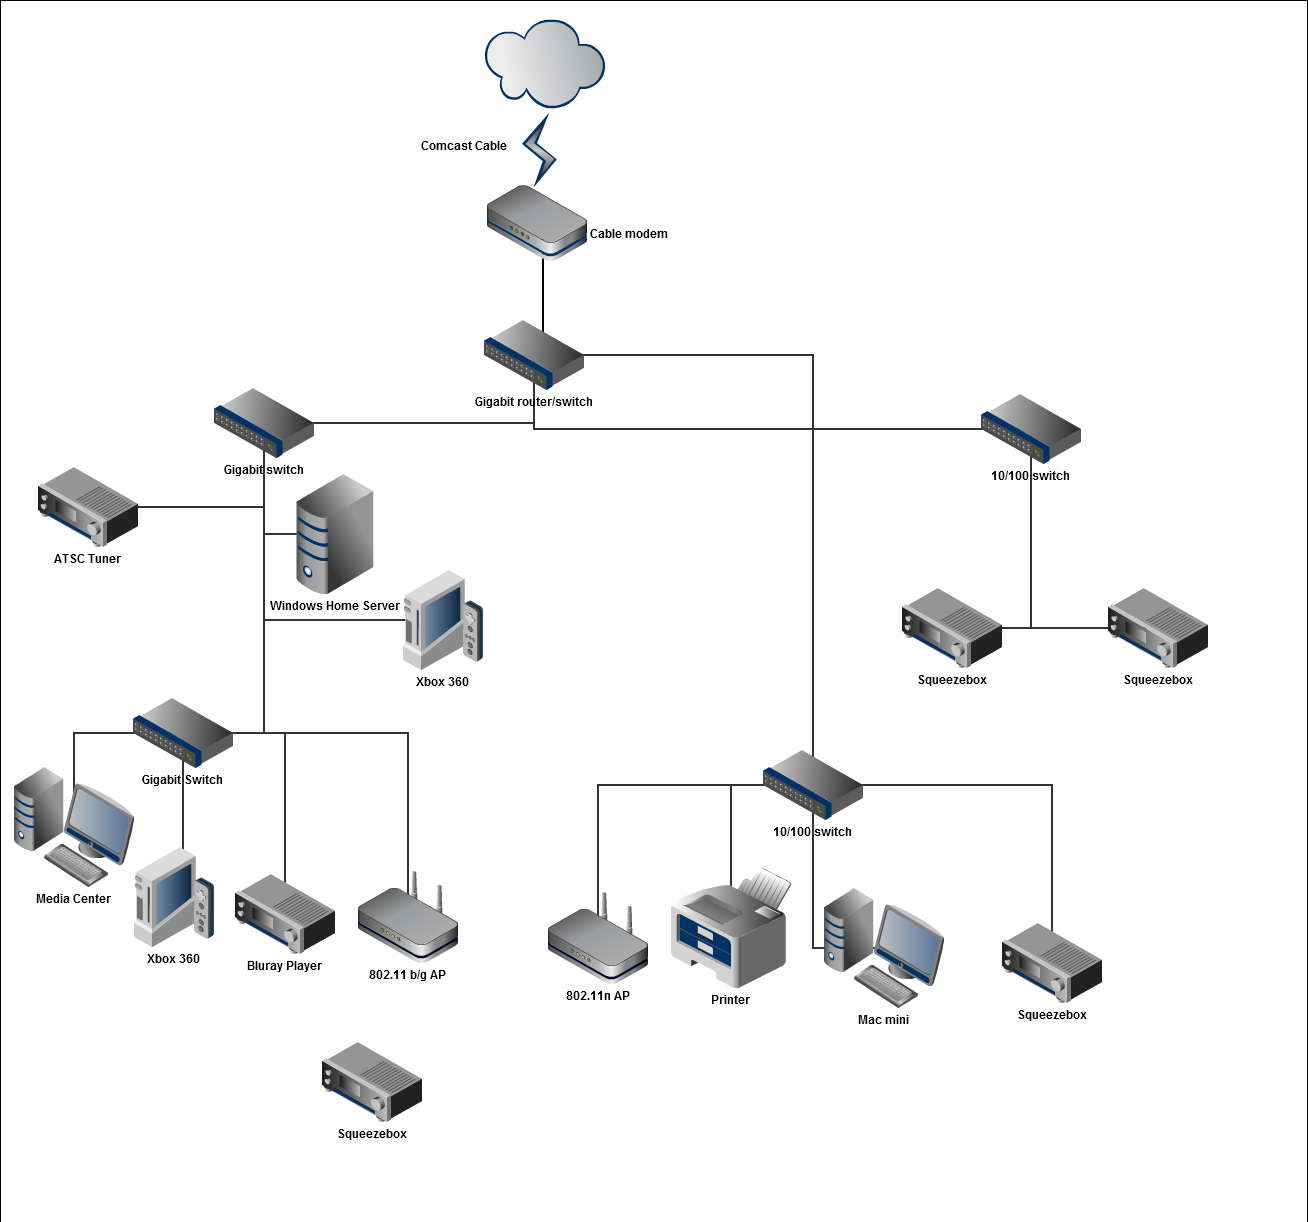 Network reorganization